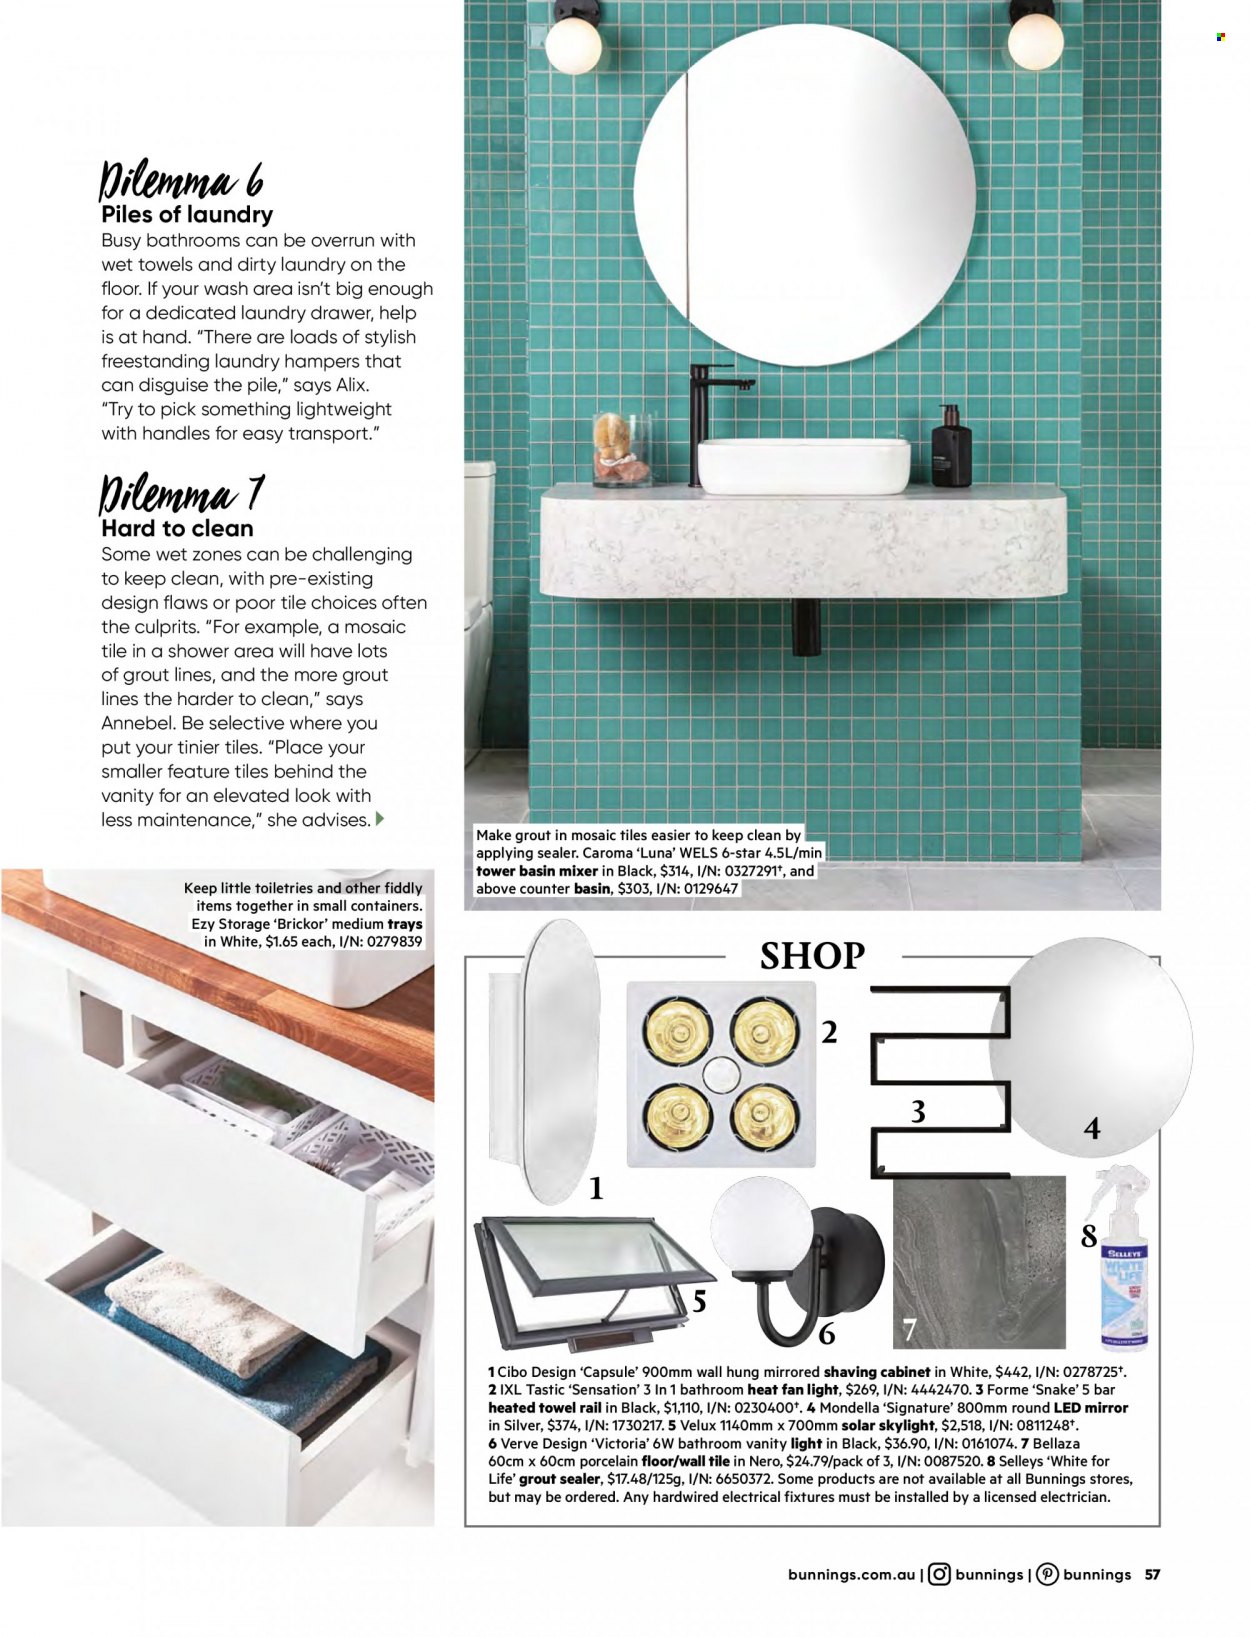 thumbnail - Bunnings Warehouse Catalogue - Sales products - basin mixer, cabinet, bathroom vanity, vanity, mirror, vanity lights, porcelain tile. Page 57.